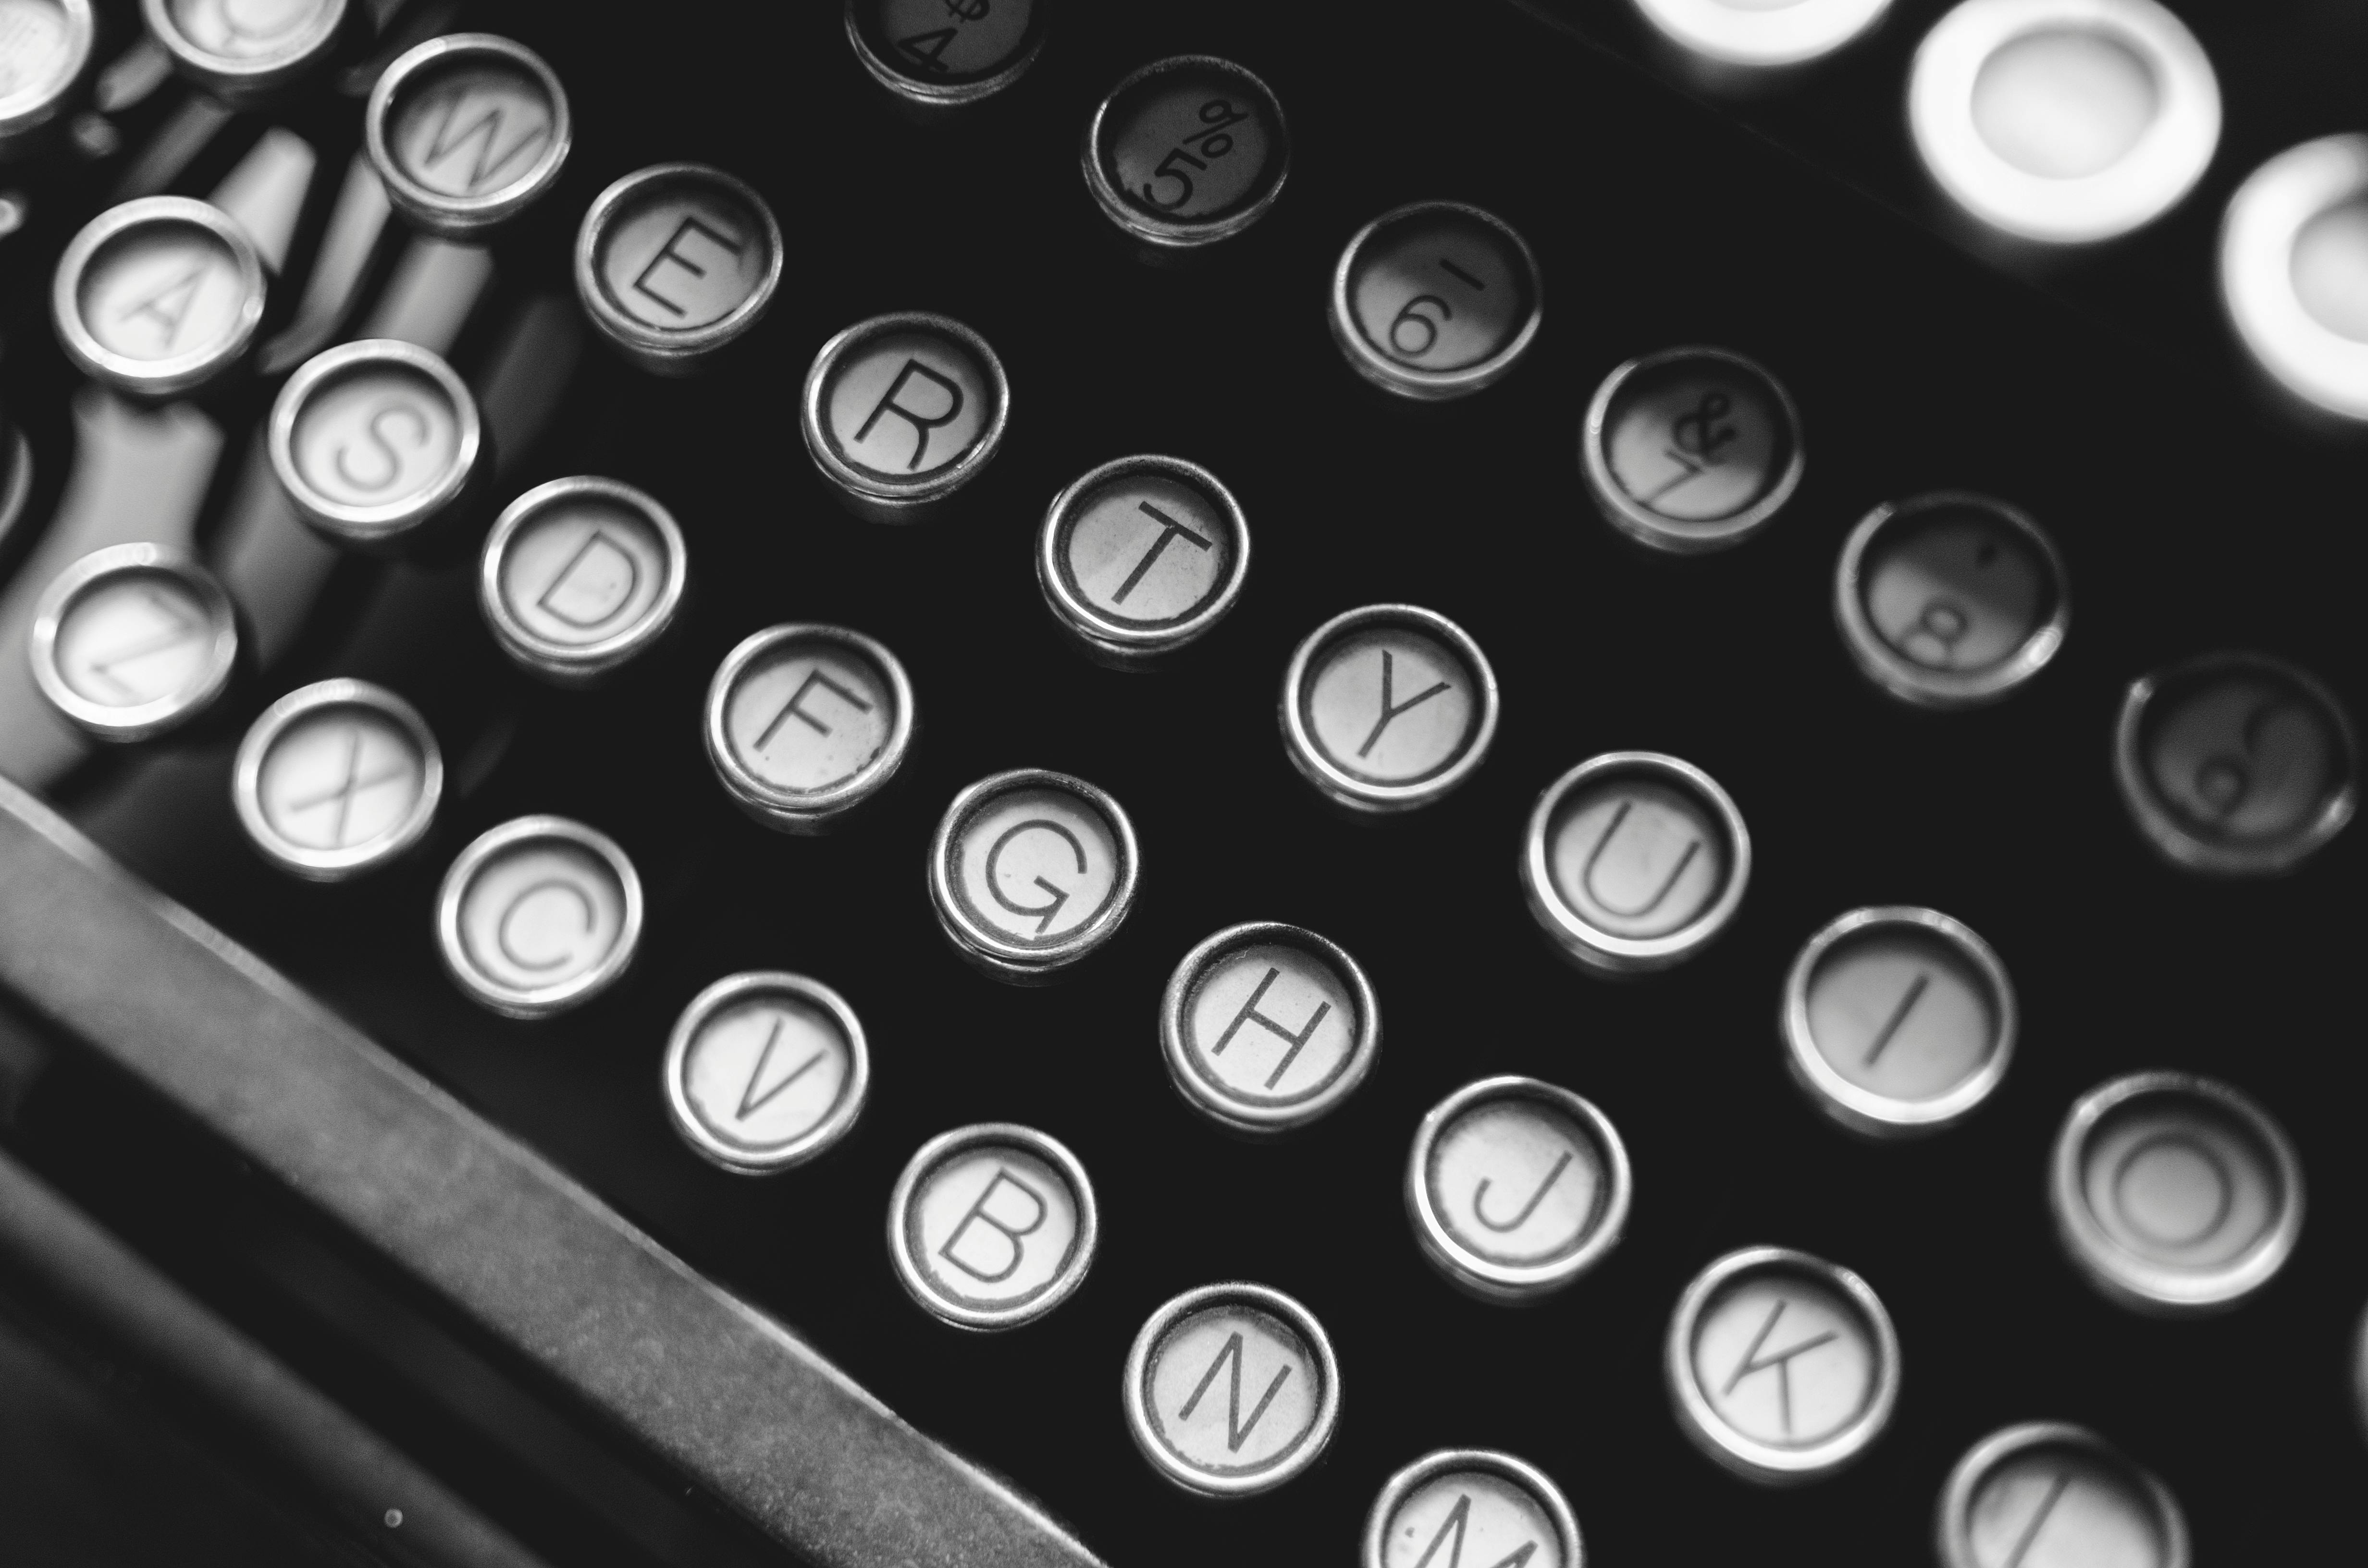 Free Stock Photo Of Aesthetics Black And White Typewriter